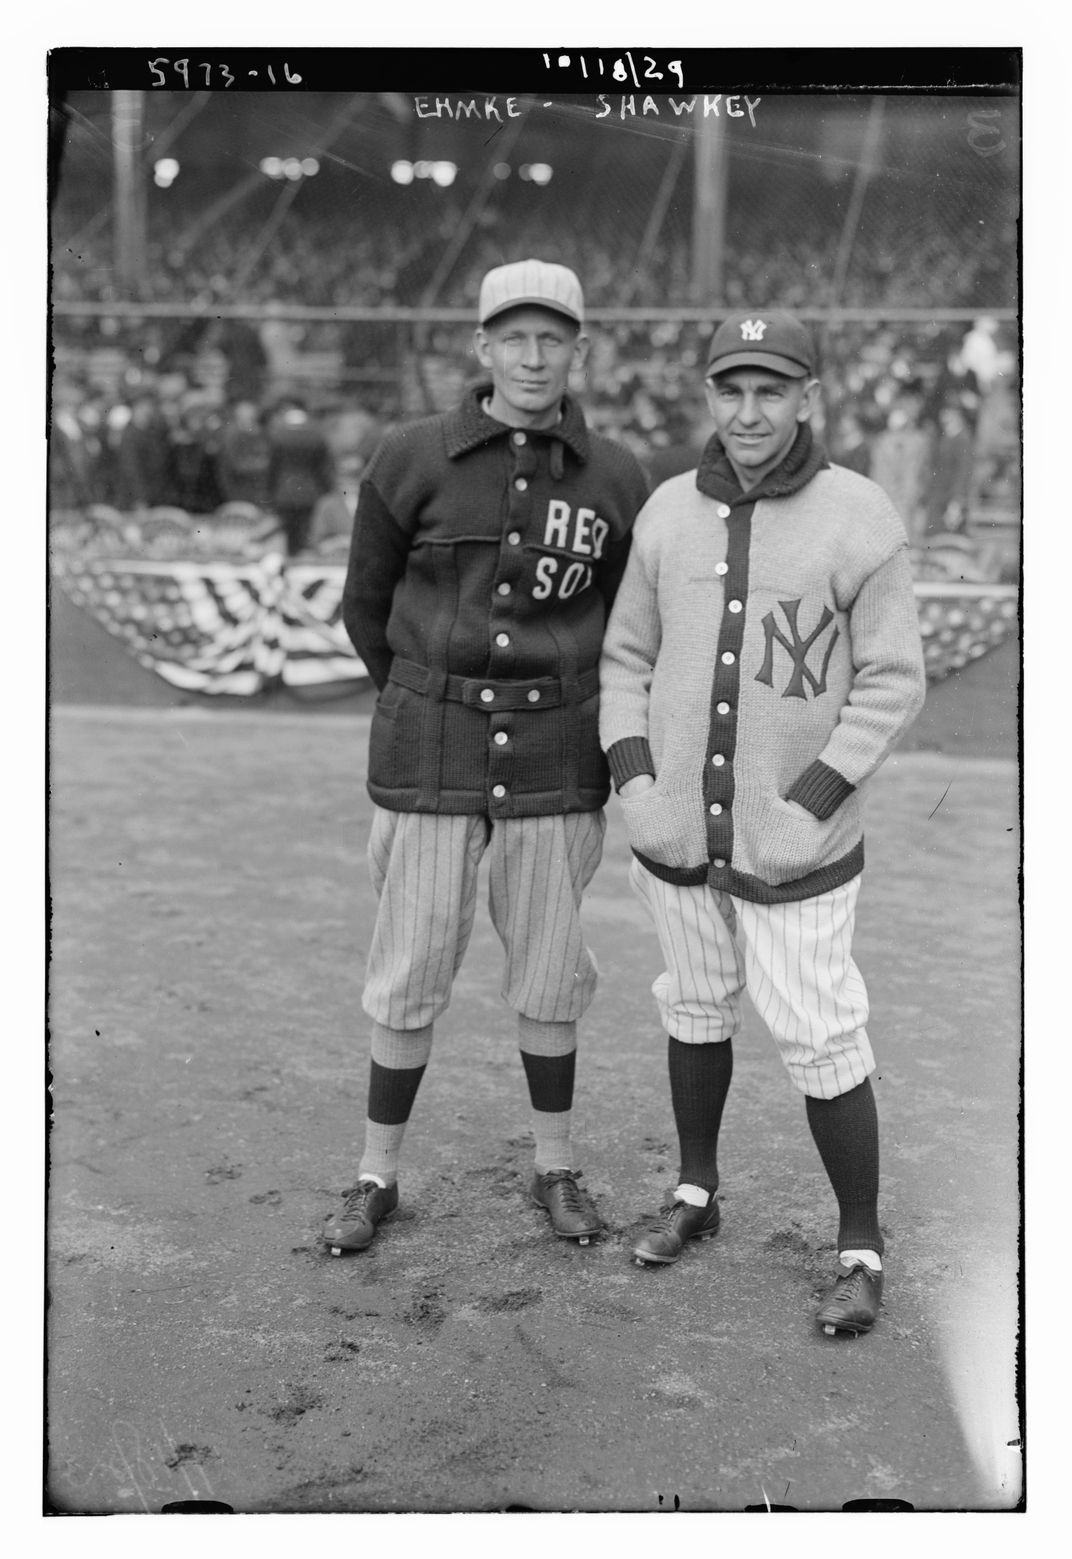 Howard Ehmke, Boston Red Sox and Bob Shawkey, New York Yankees